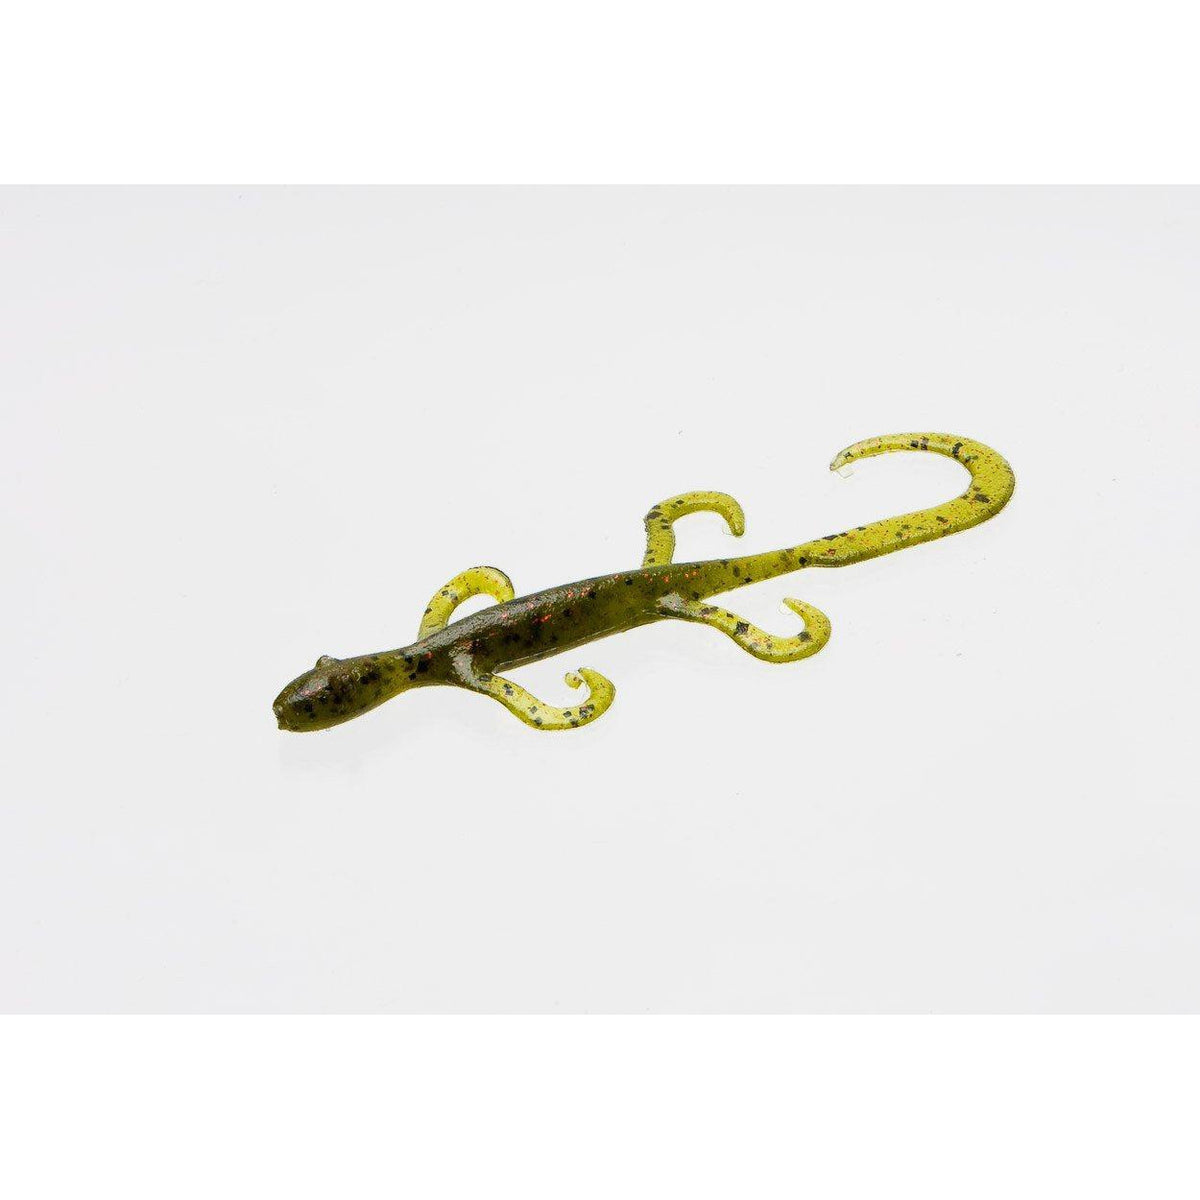 Lizard Fishing Rod & Reel Storage & Accessories, Best Price in Nigeria